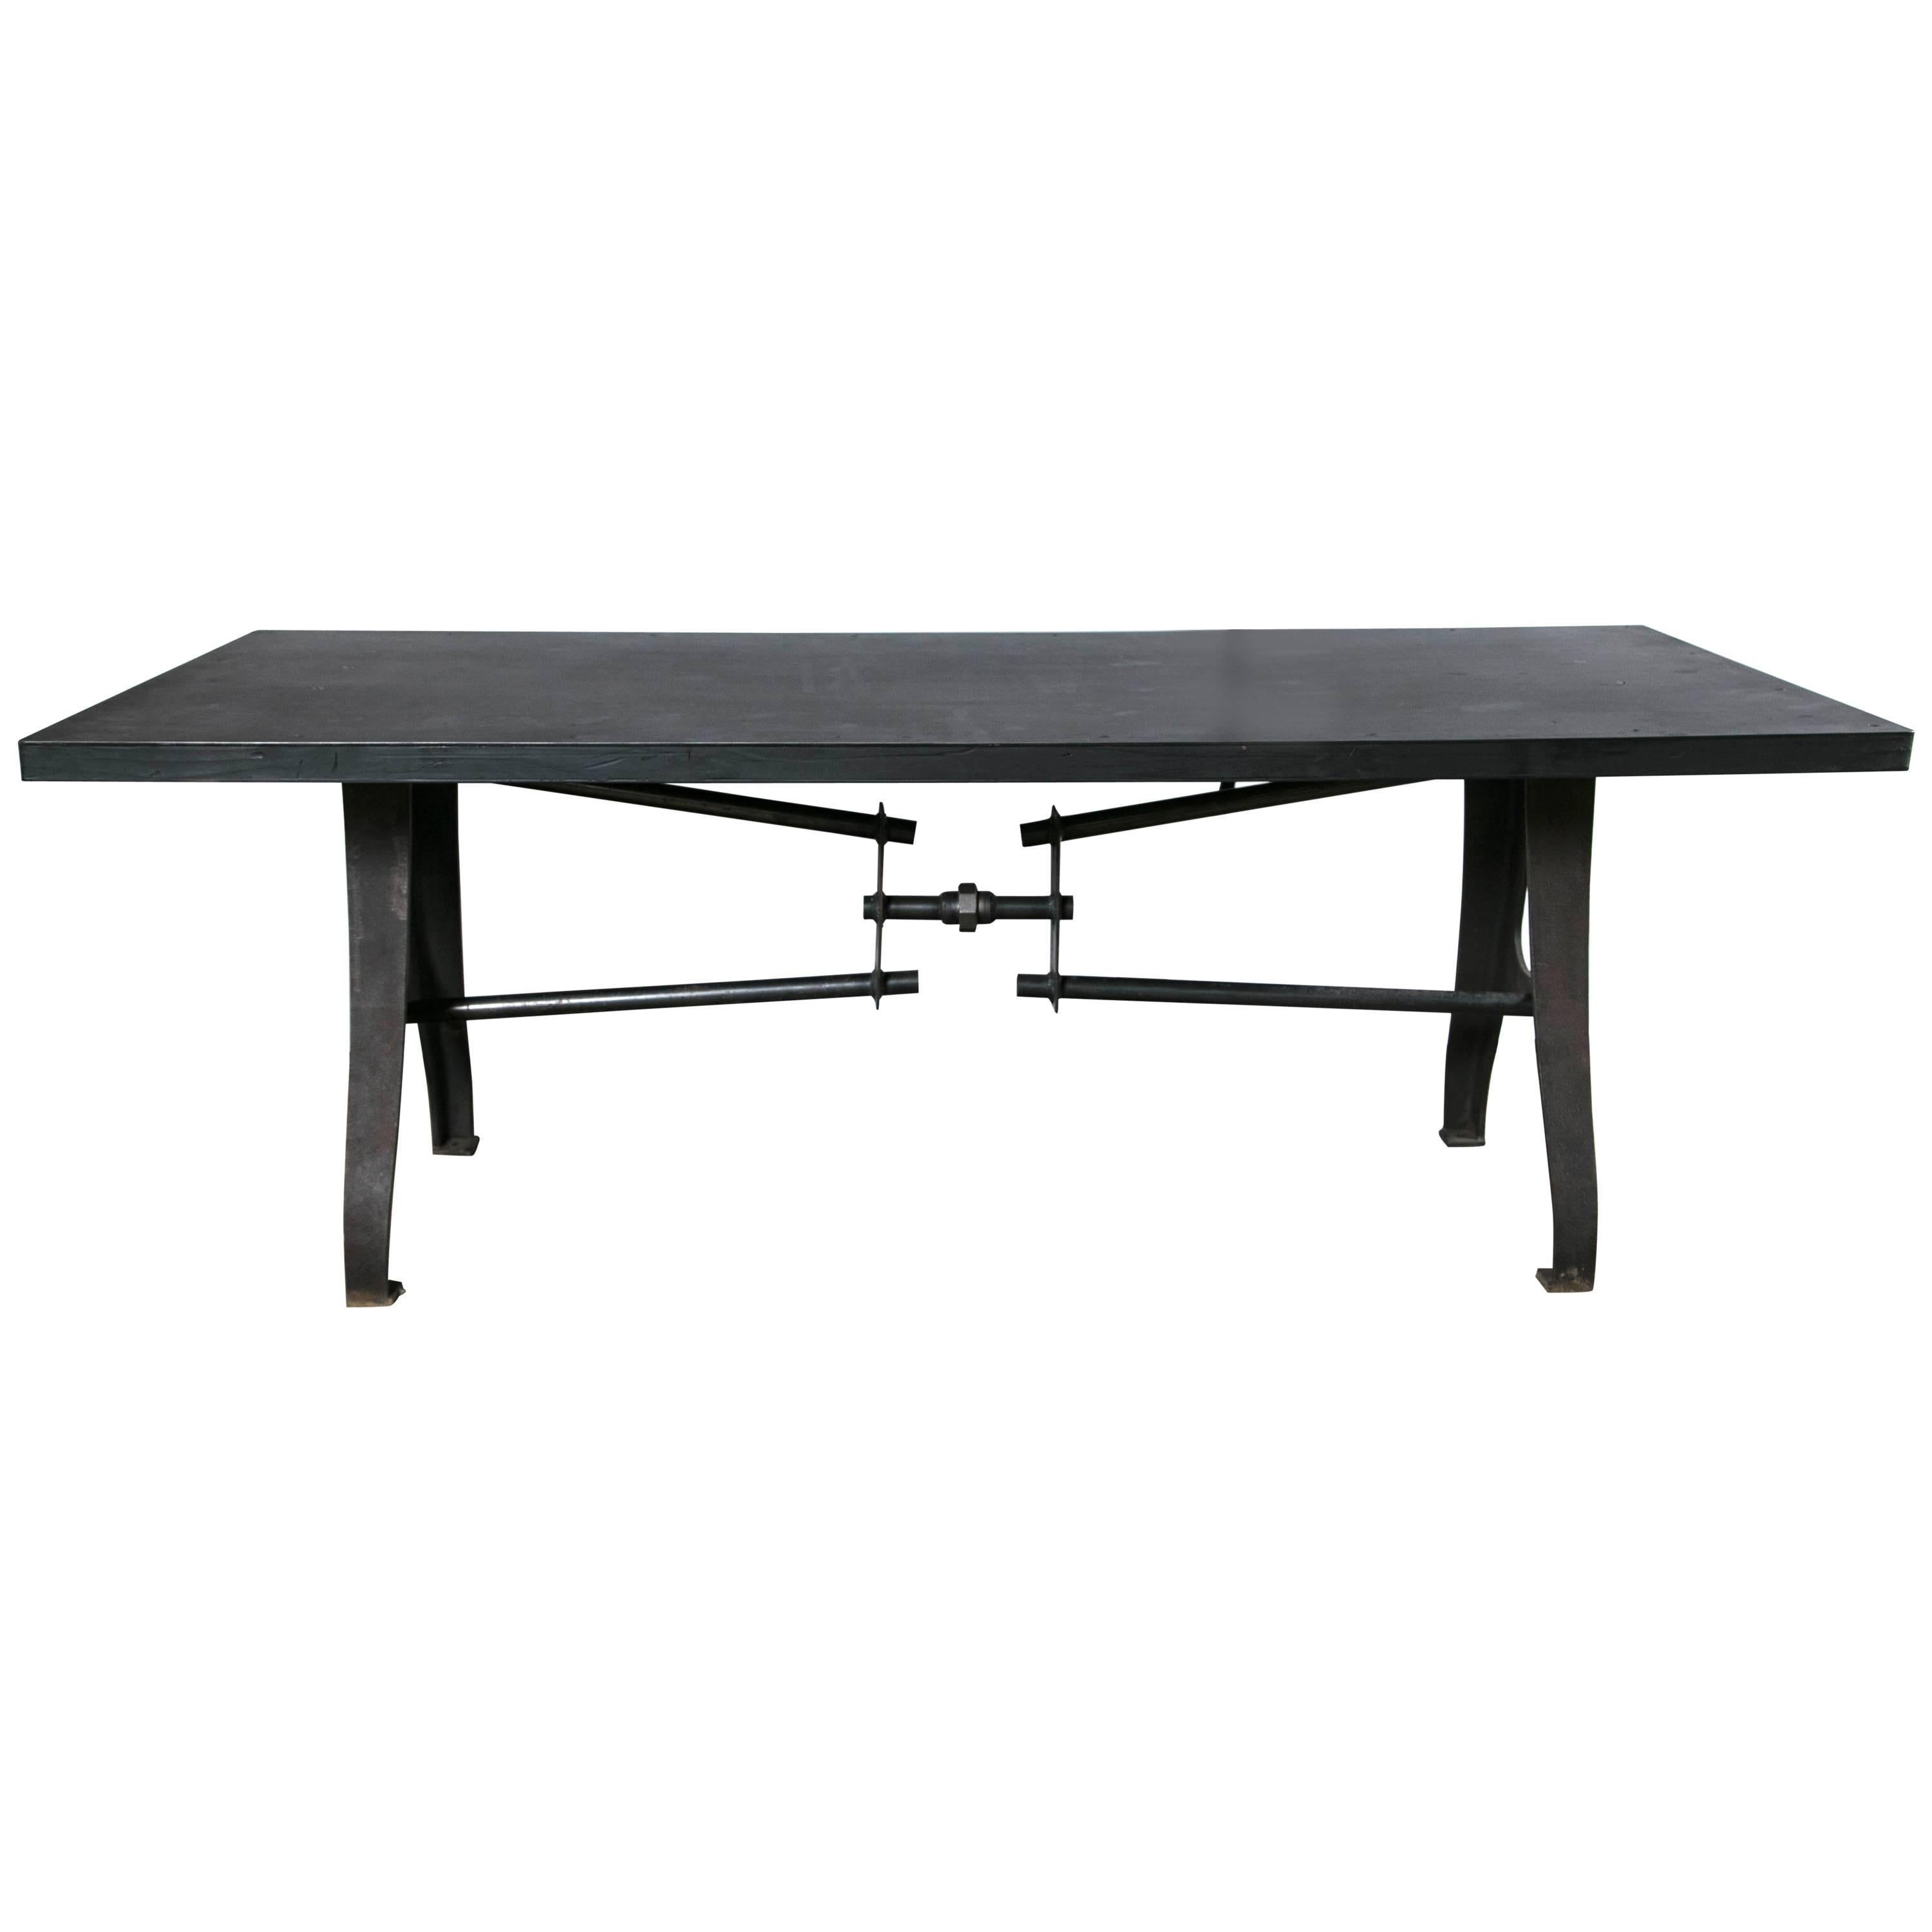 Steel Top Table on Industrial Base